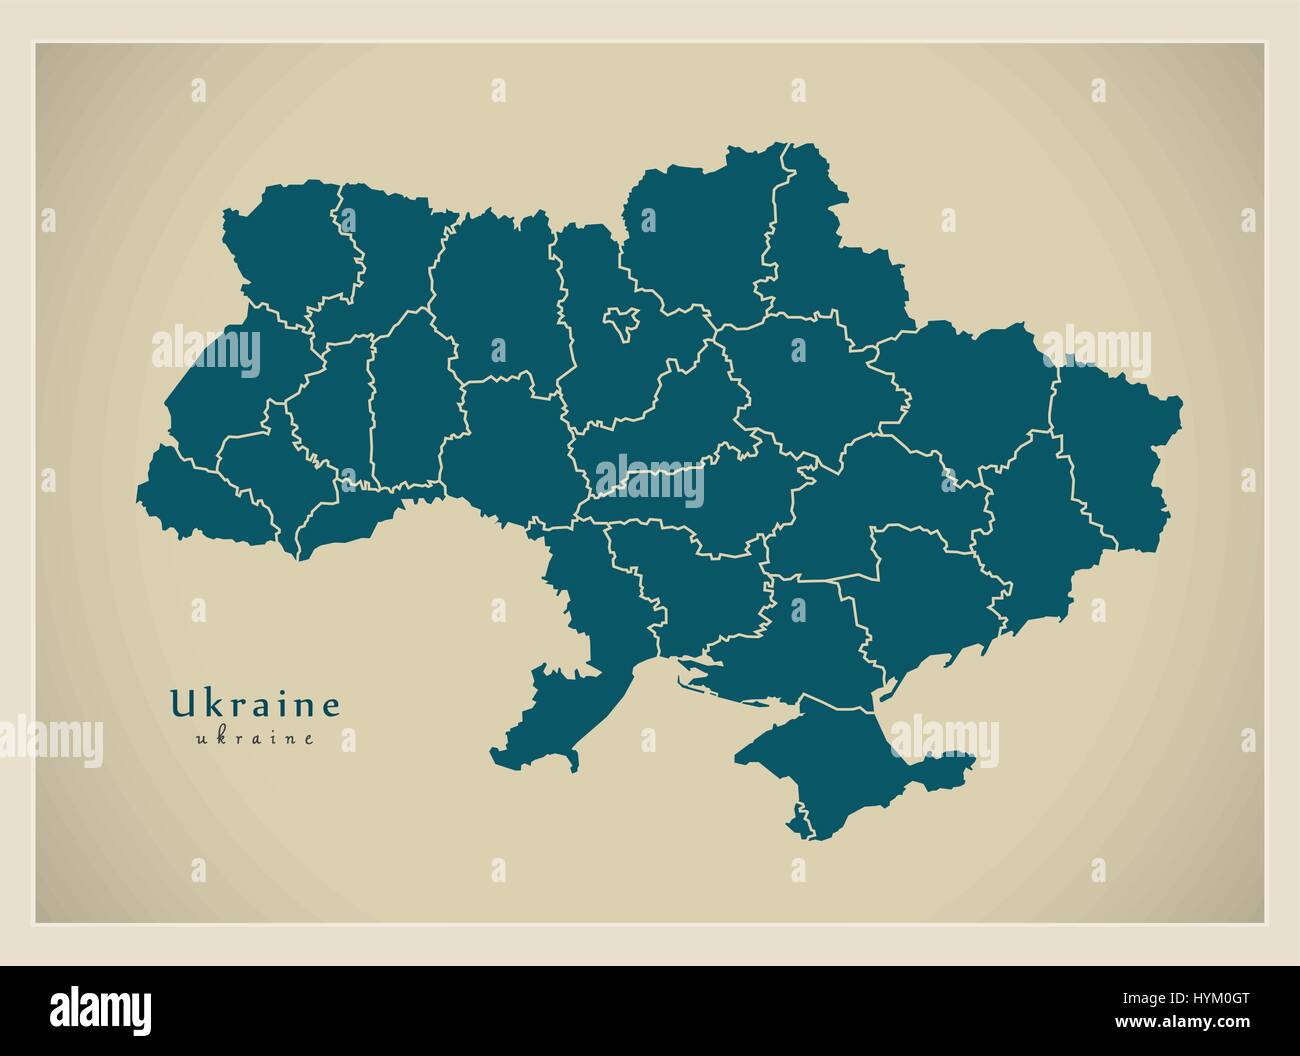 Map of Ukraine with Regions. Титан на карте Украины. Ukraine Regions Map White. Счастье Украина на карте. Ukraine regions